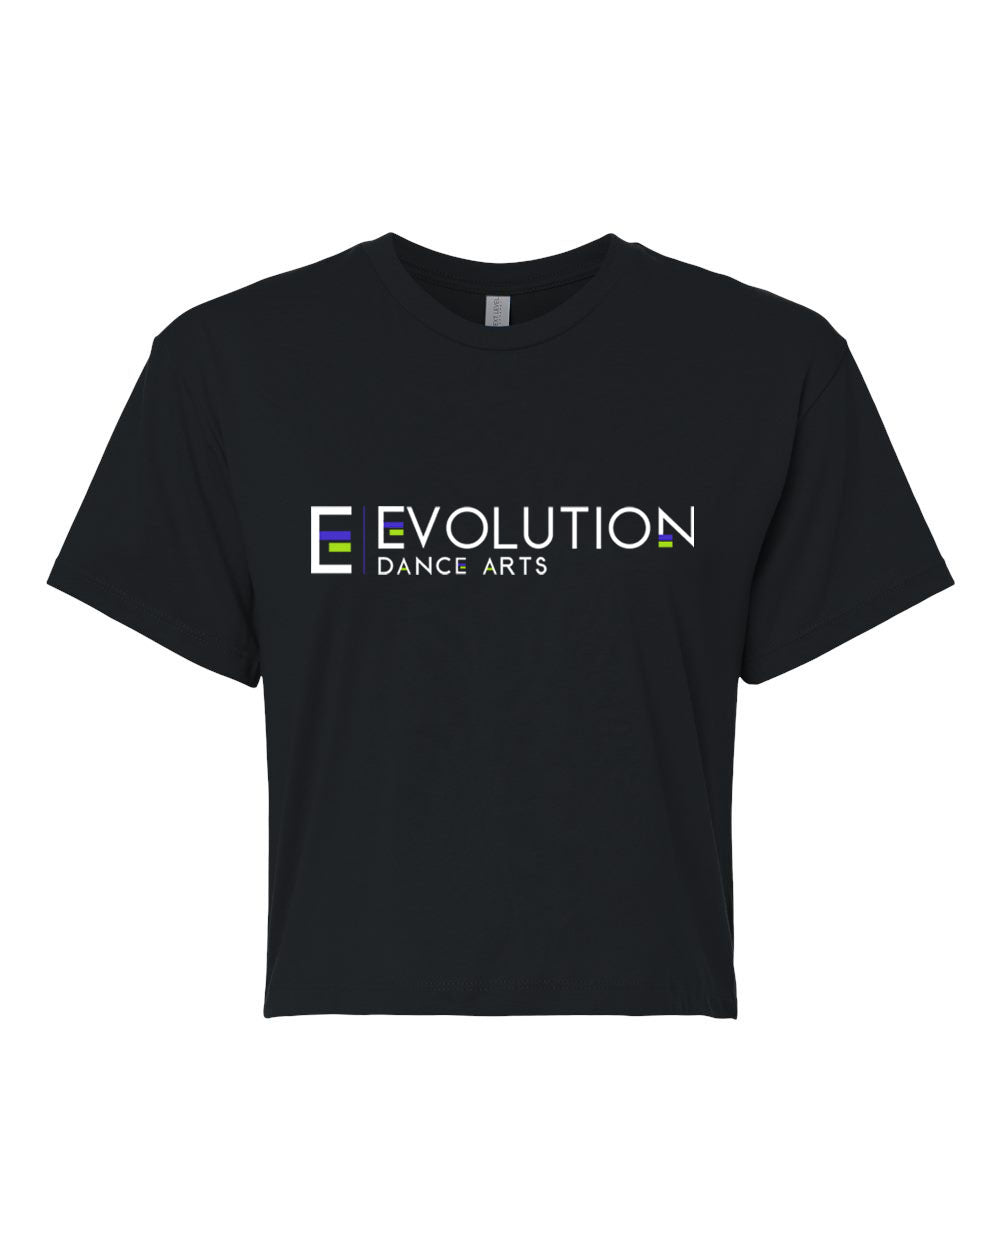 Evolution Dance Arts Design 1 Crop Top